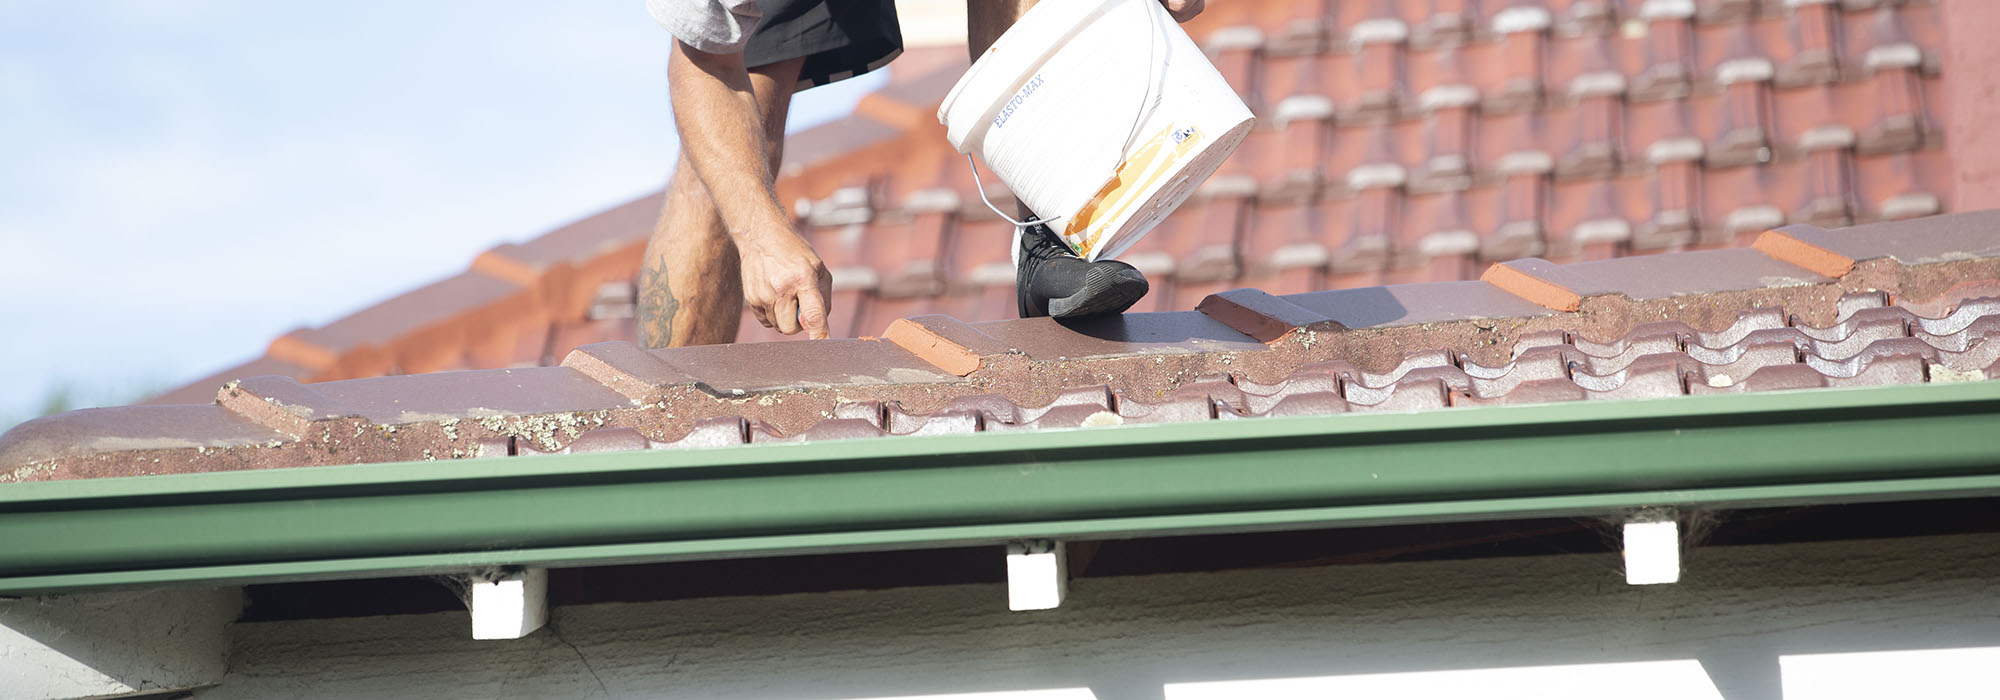 Roof Restorations Perth